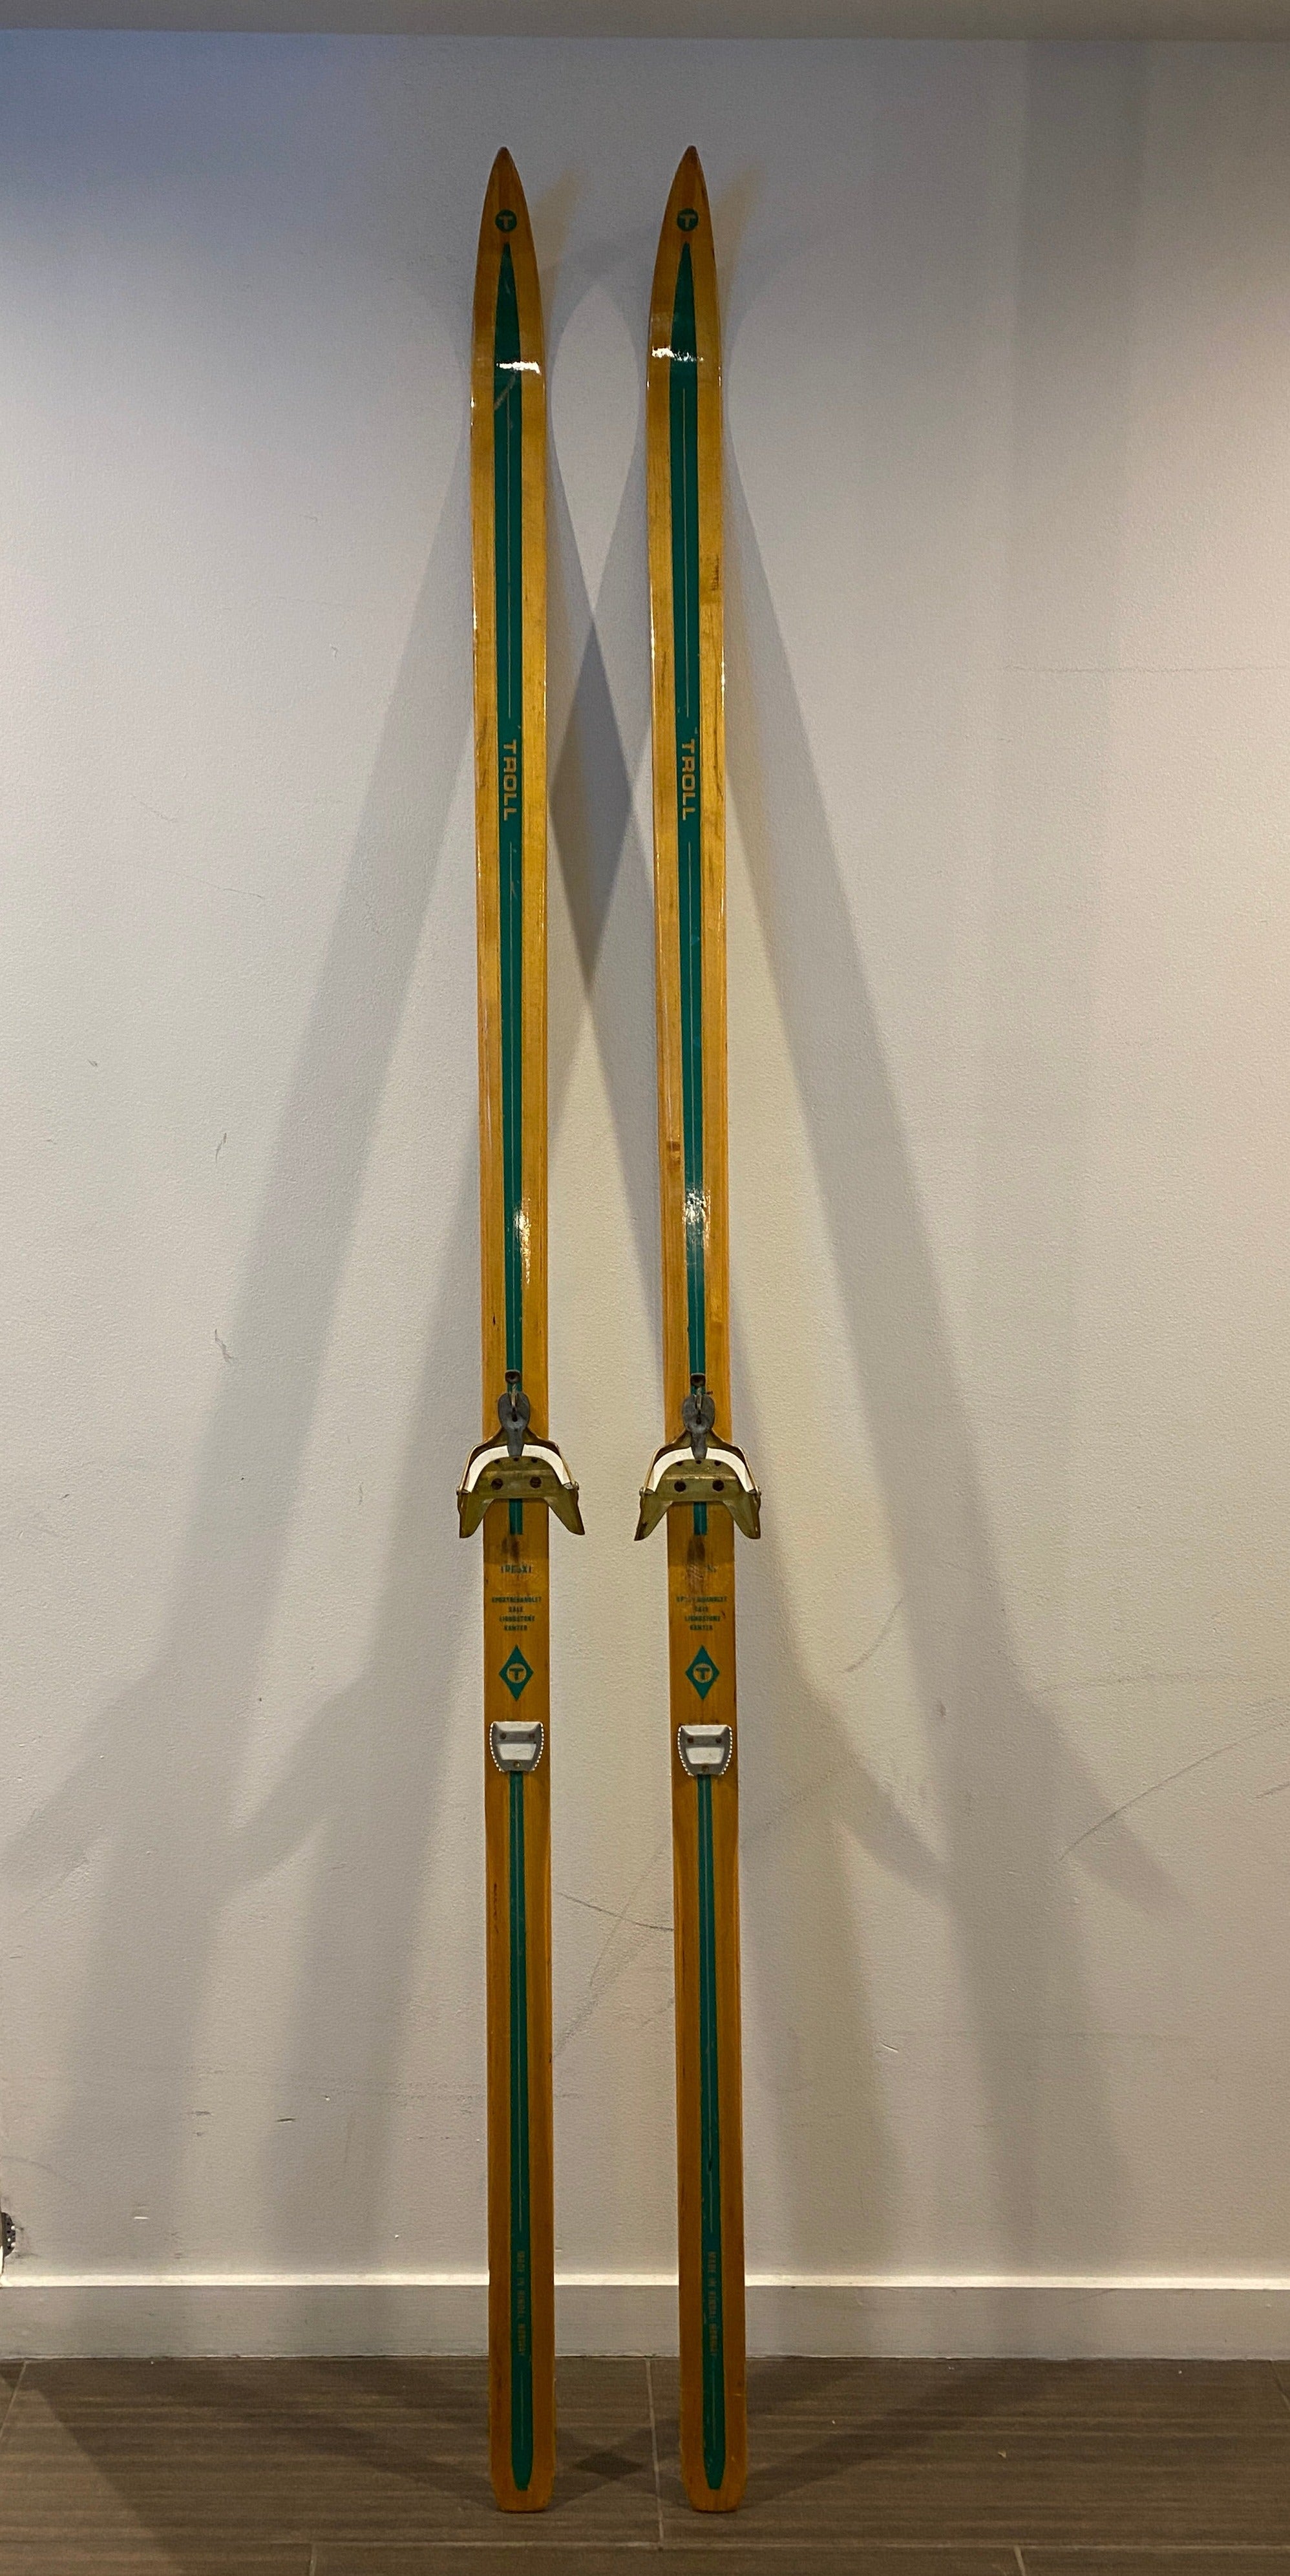 Vintage Troll 197cm pair, mounted with vintage 3-pin Villom bindings. Front of skis